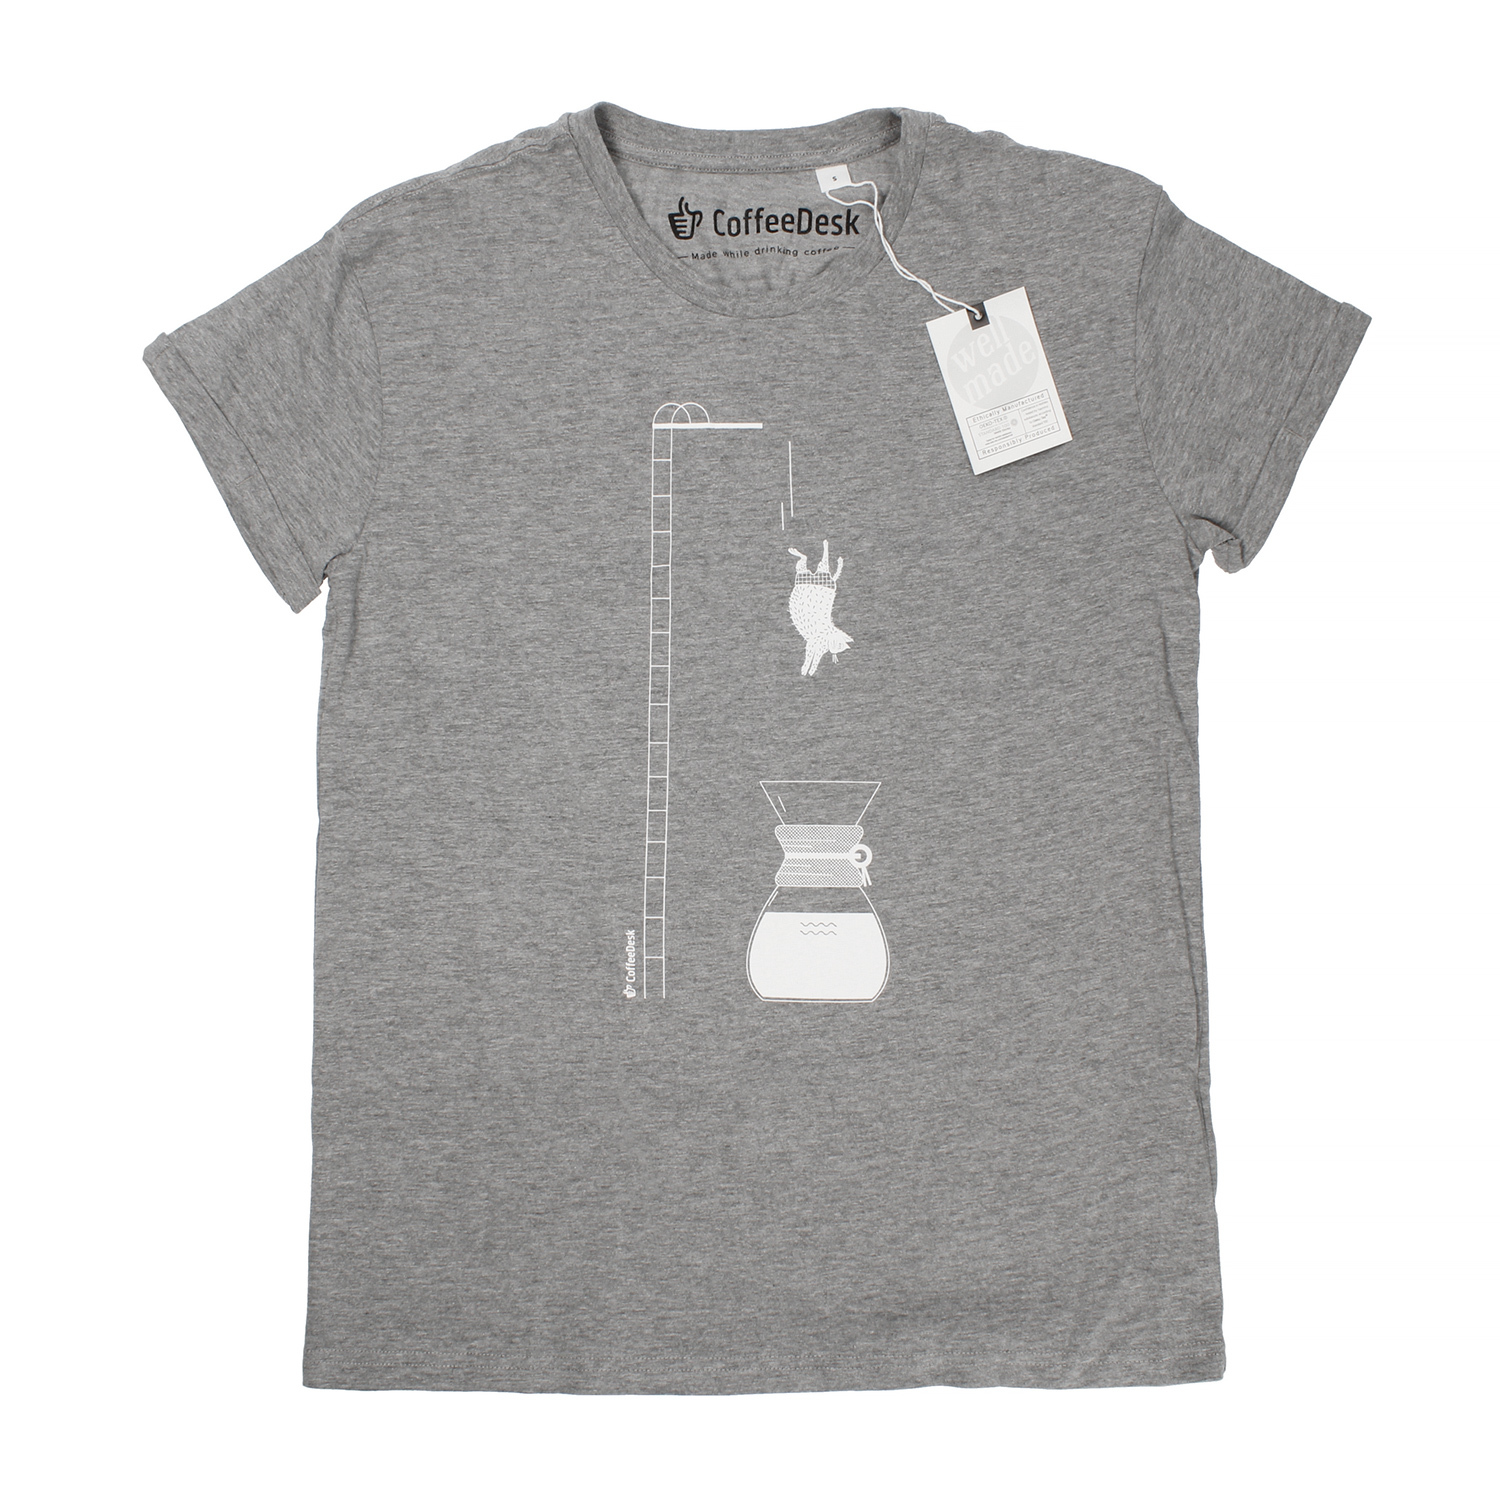 Coffeedesk Chemex Men's Grey T-shirt - M